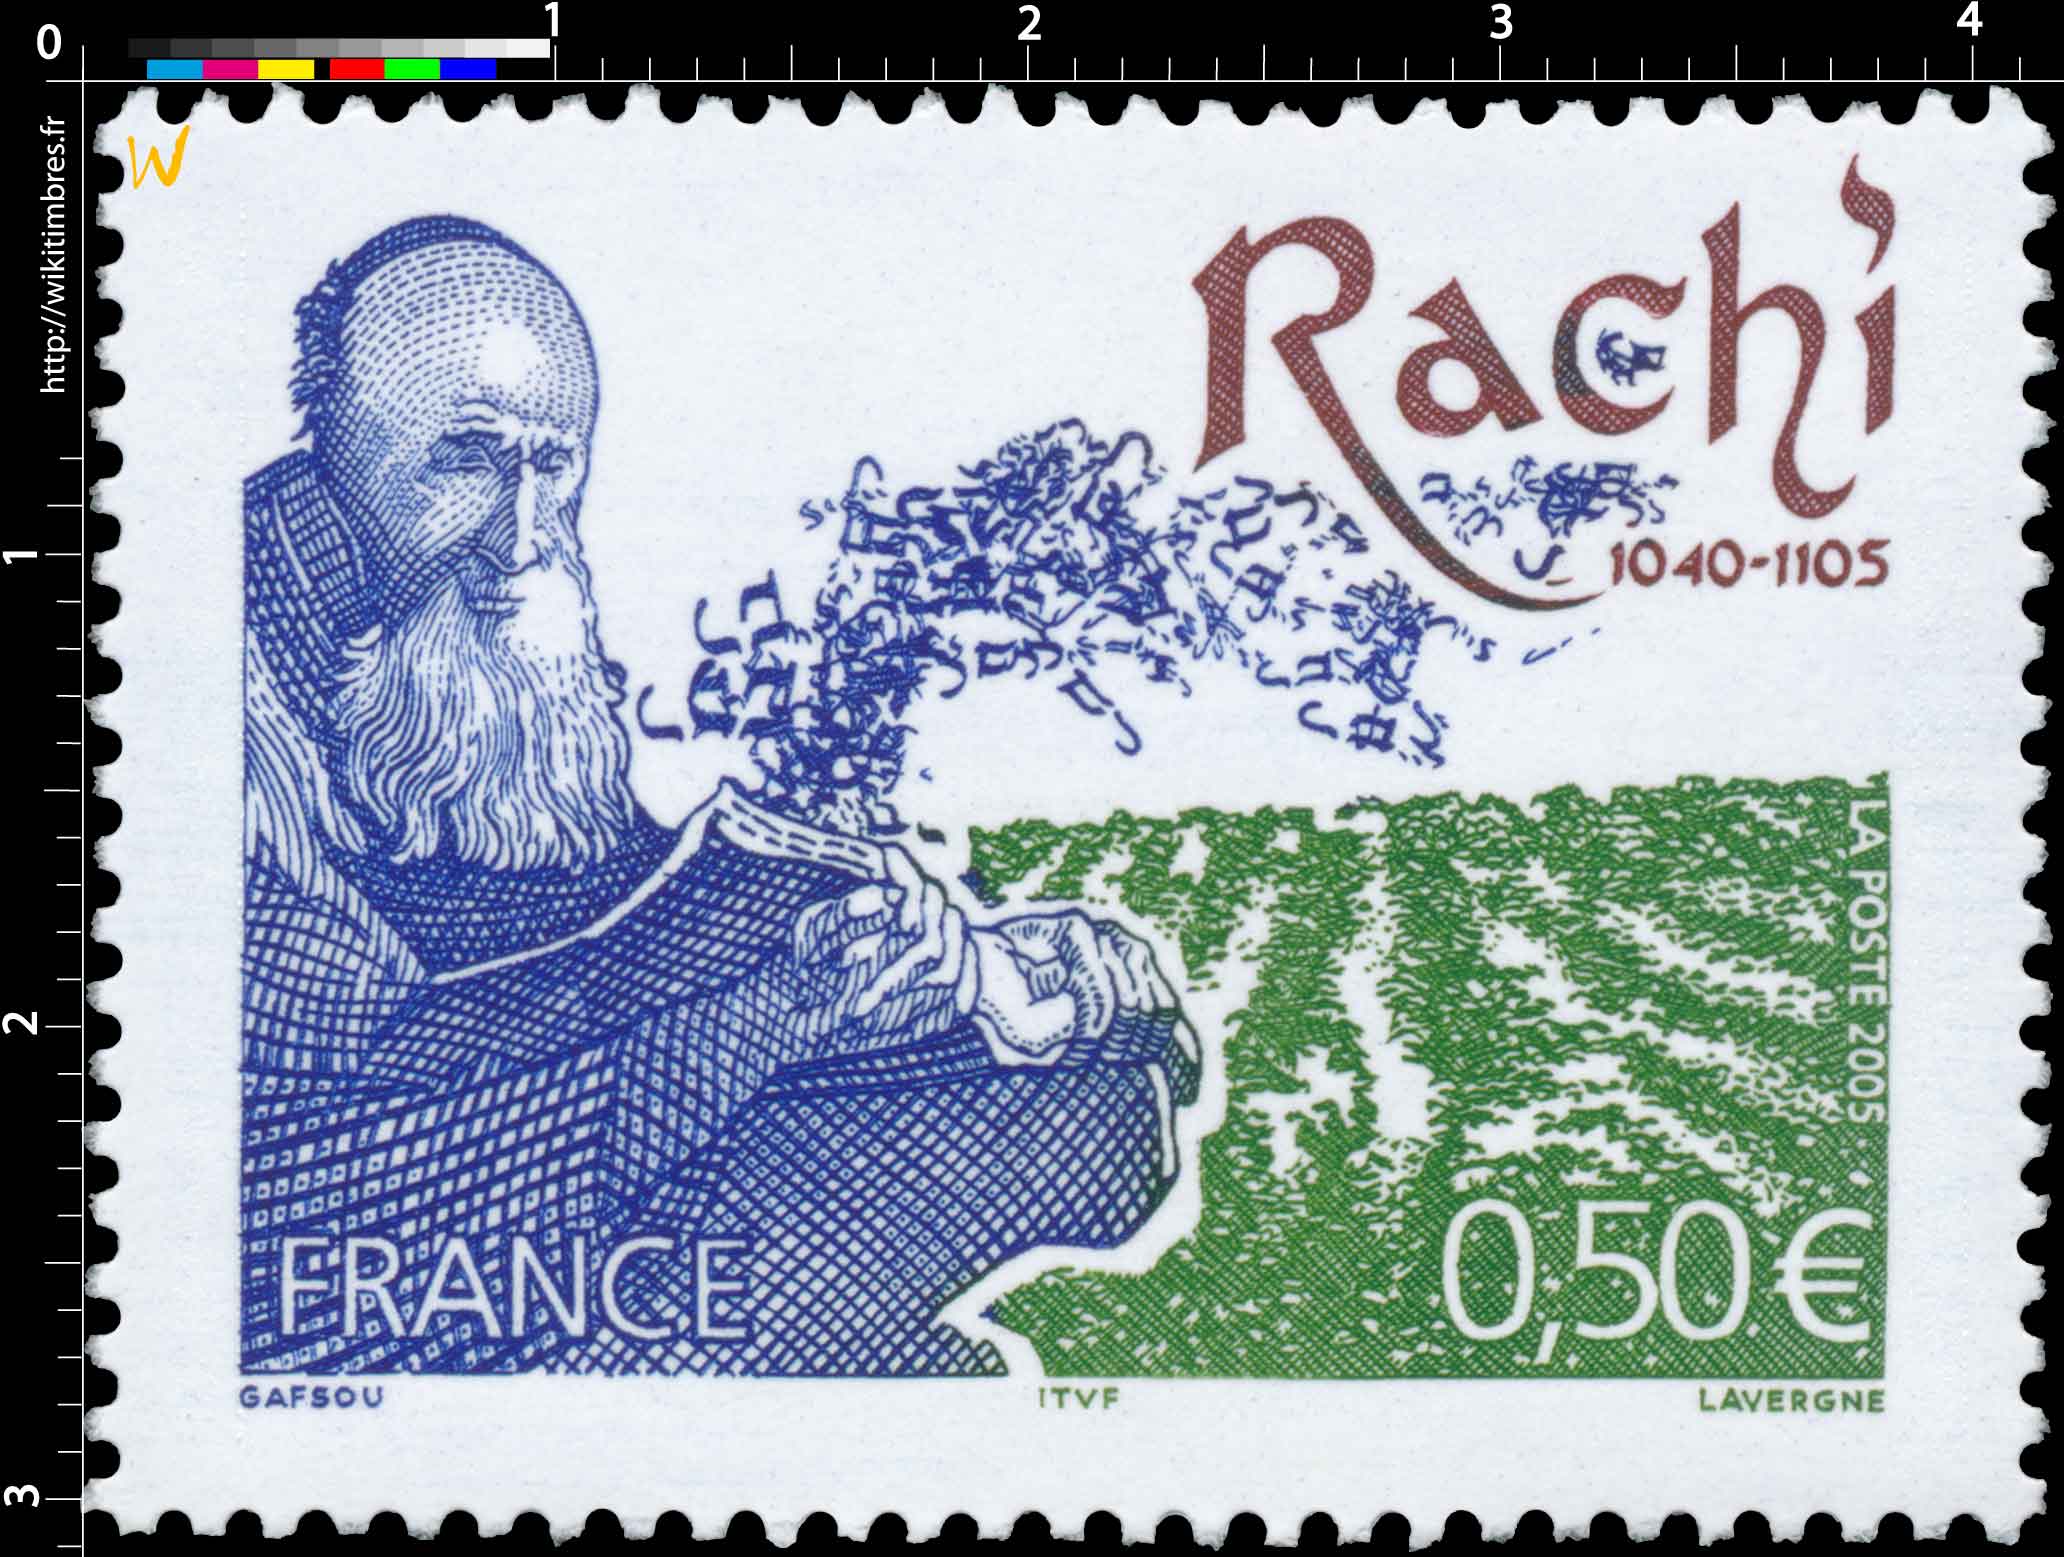 2005 Rachi 1040-1105